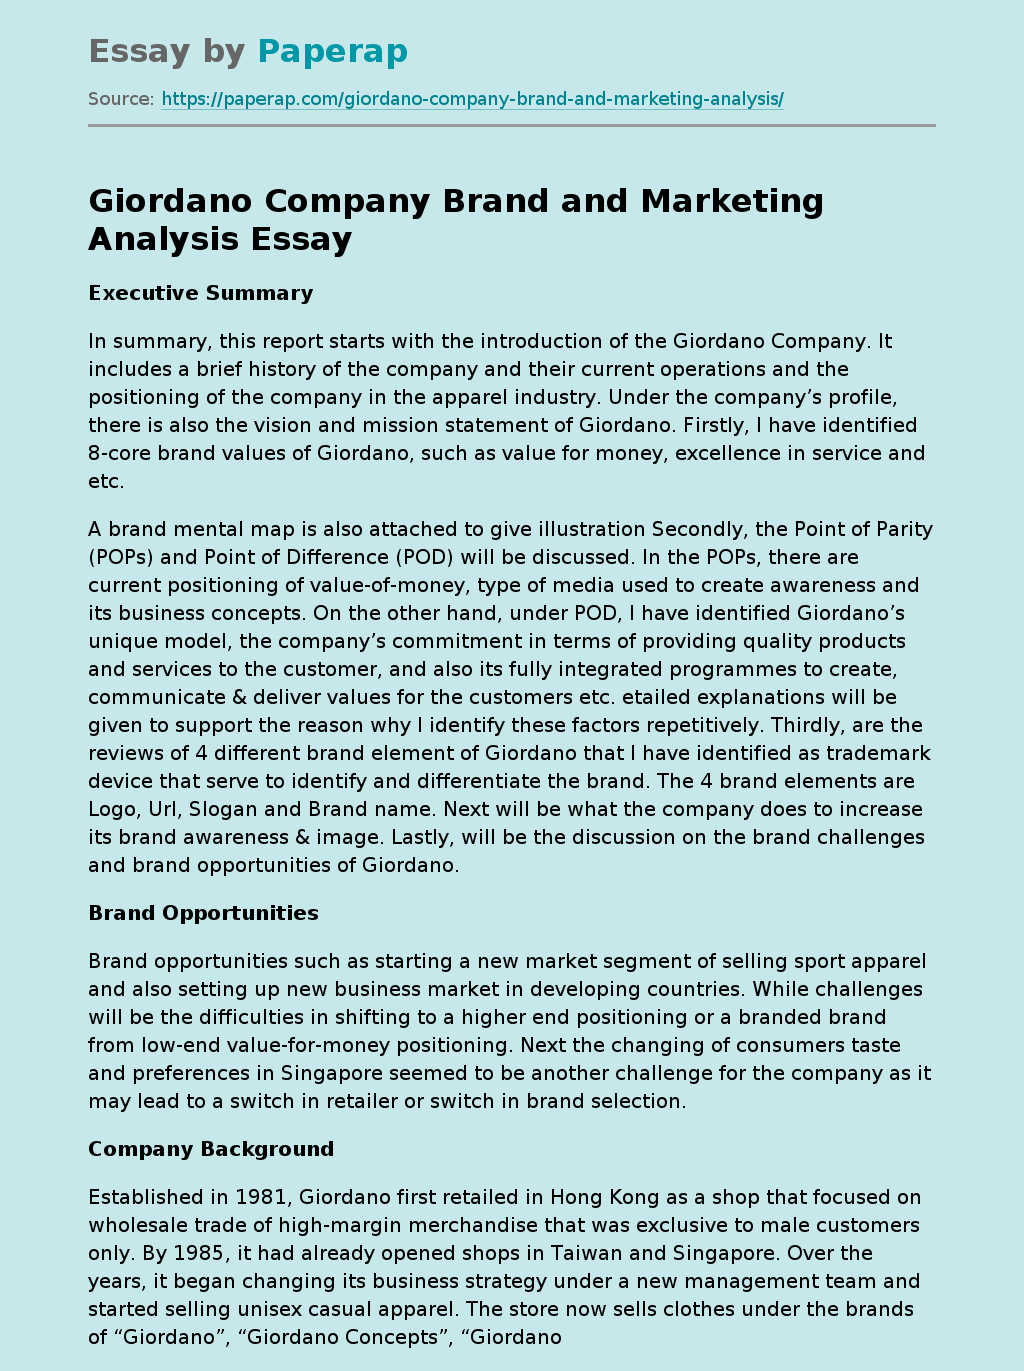 Giordano Company Brand and Marketing Analysis